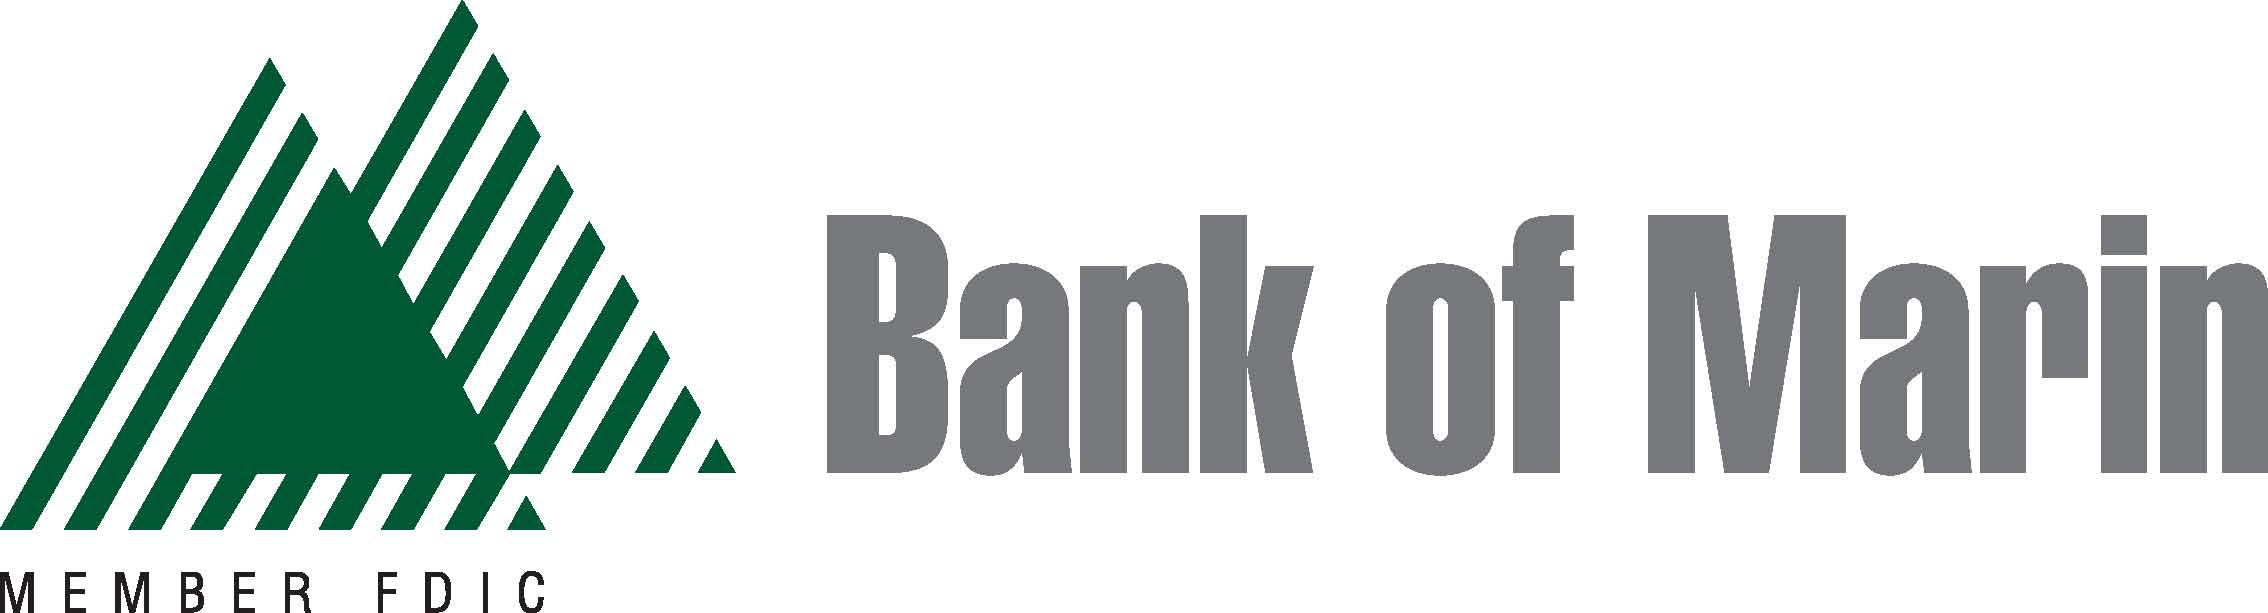 Bank of Marin logo